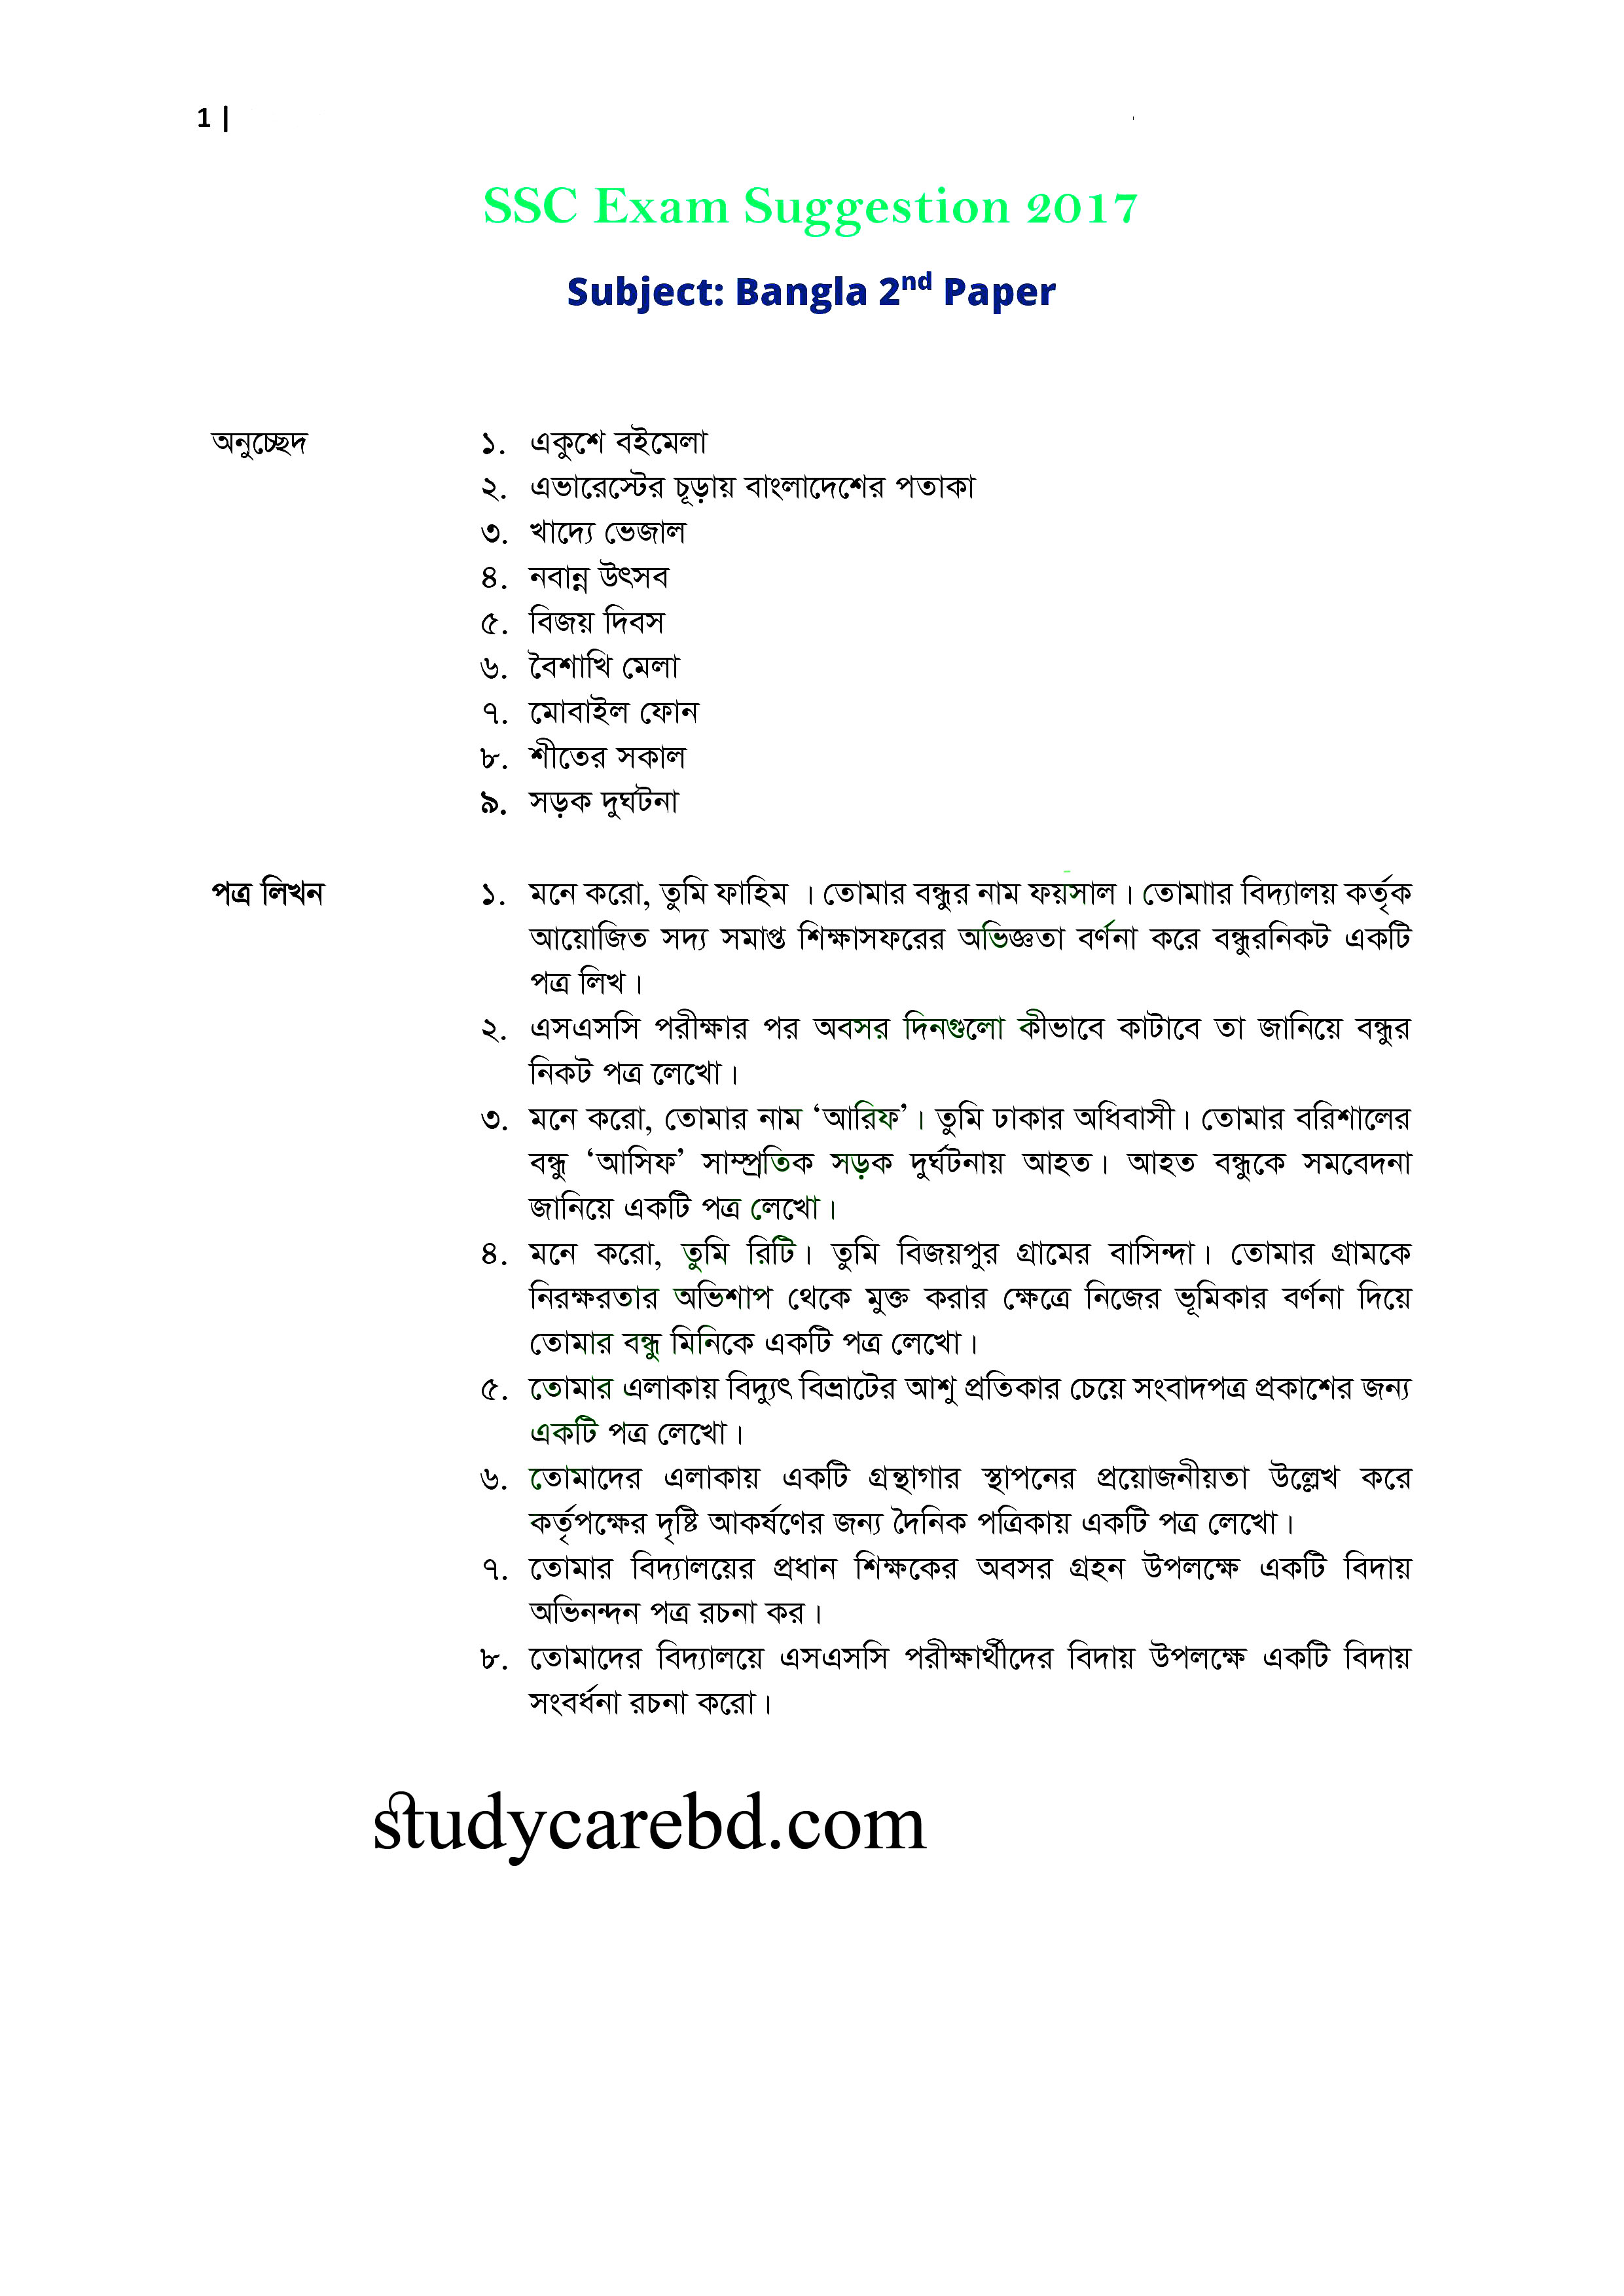 https://studycarebdcom.files.wordpress.com/2017/11/bangla-2nd-paper-short-suggestion-2017-barishal-board.jpg